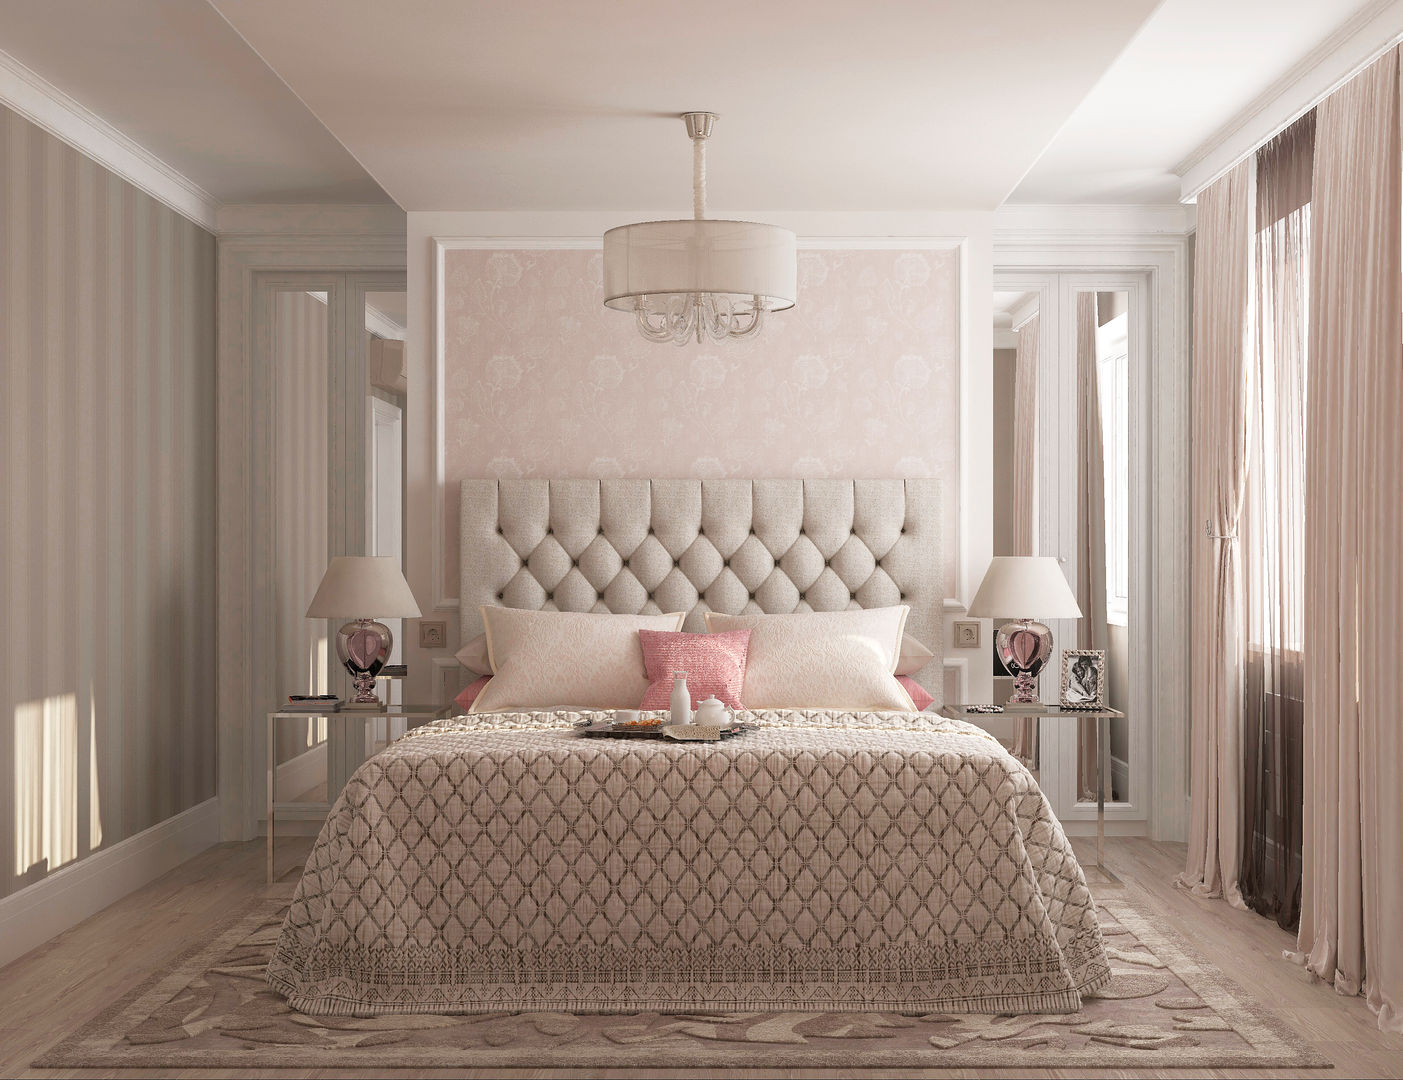 Спальня гостевая "Glamour", Студия дизайна Дарьи Одарюк Студия дизайна Дарьи Одарюк Klassieke slaapkamers